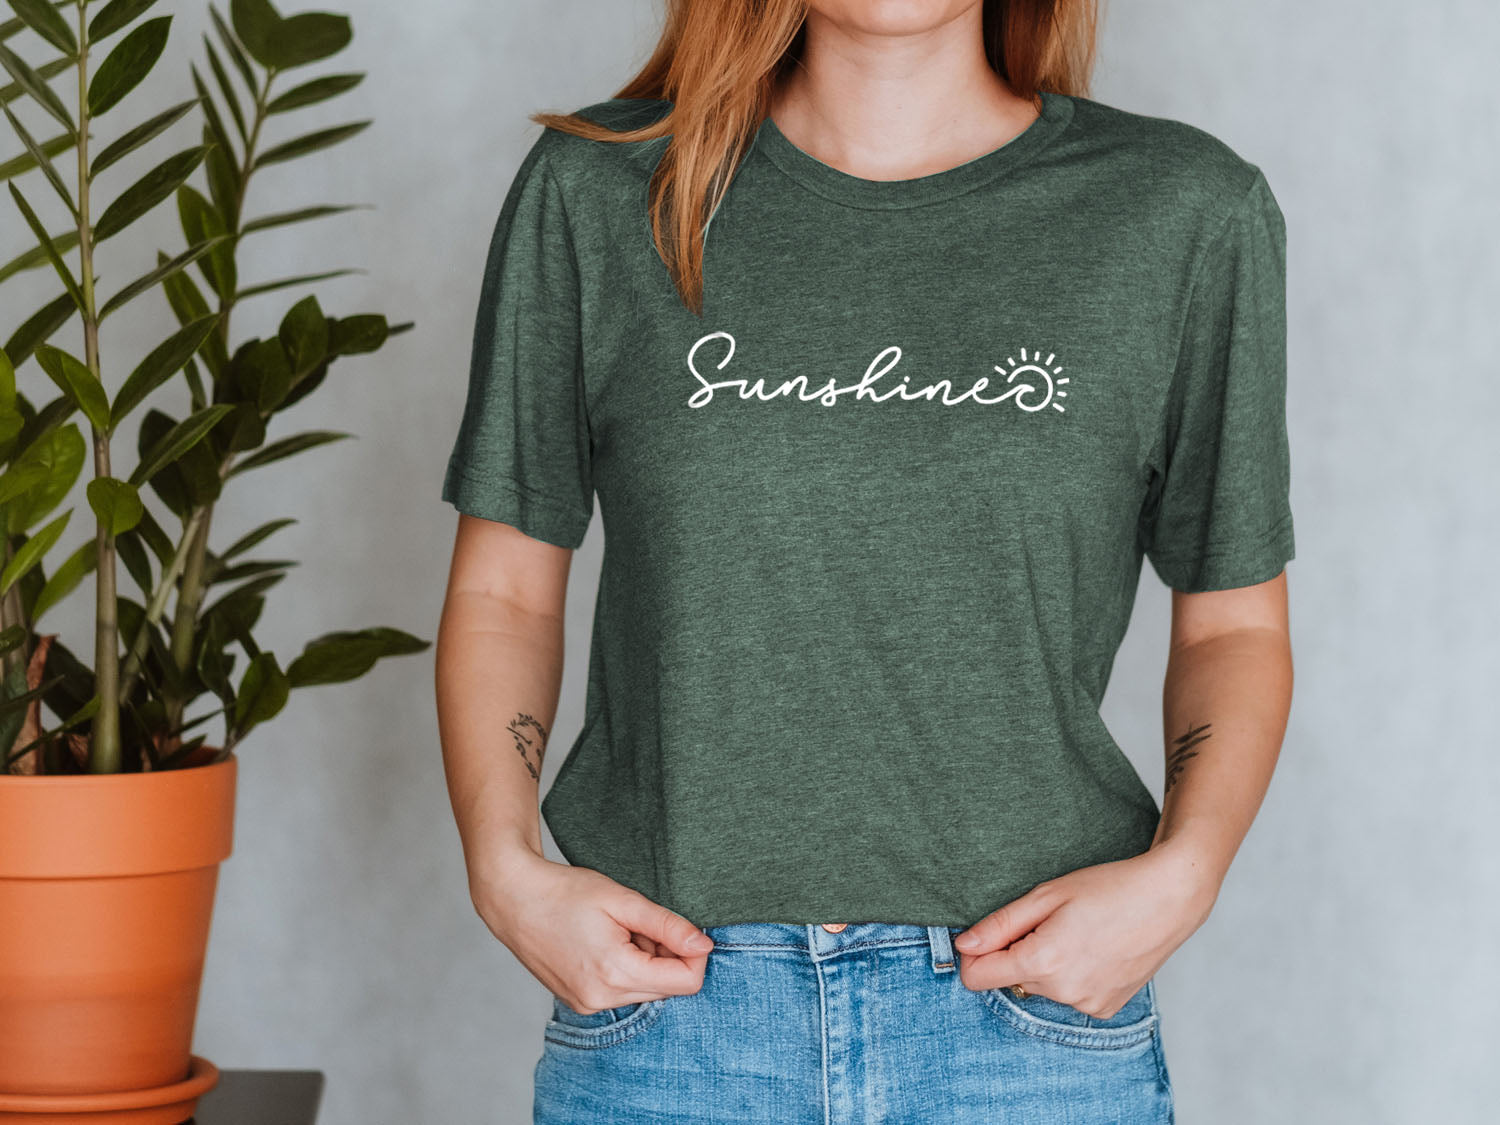 Sunshine T-shirt - Beach Vibes California State Minimal Design Printed Tee Shirt